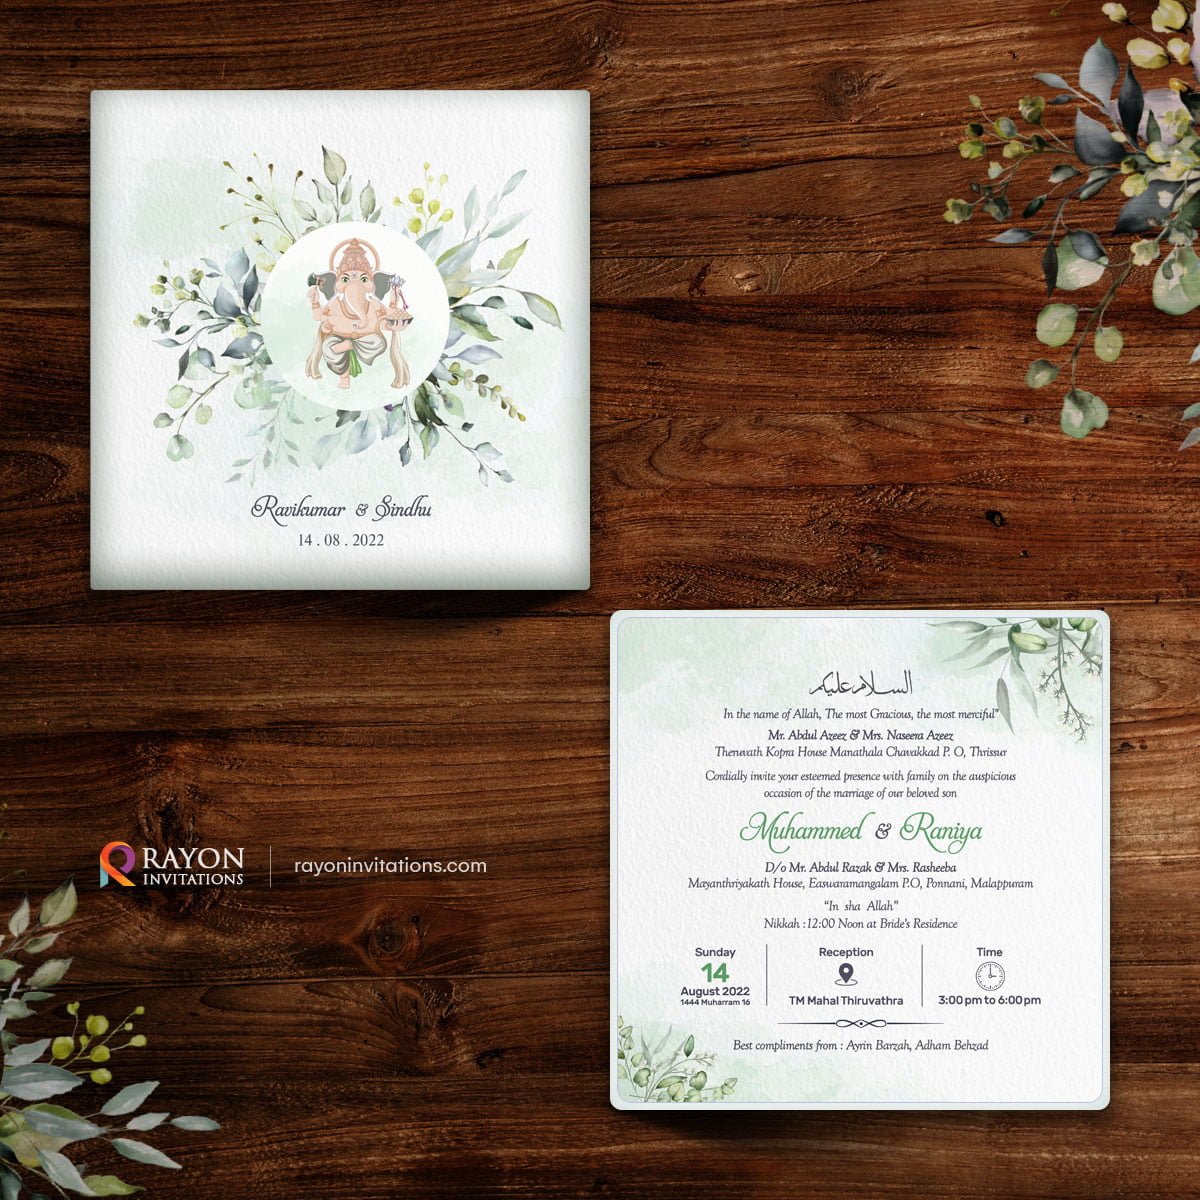 Wedding Cards & Invitation Cards at Valanchery